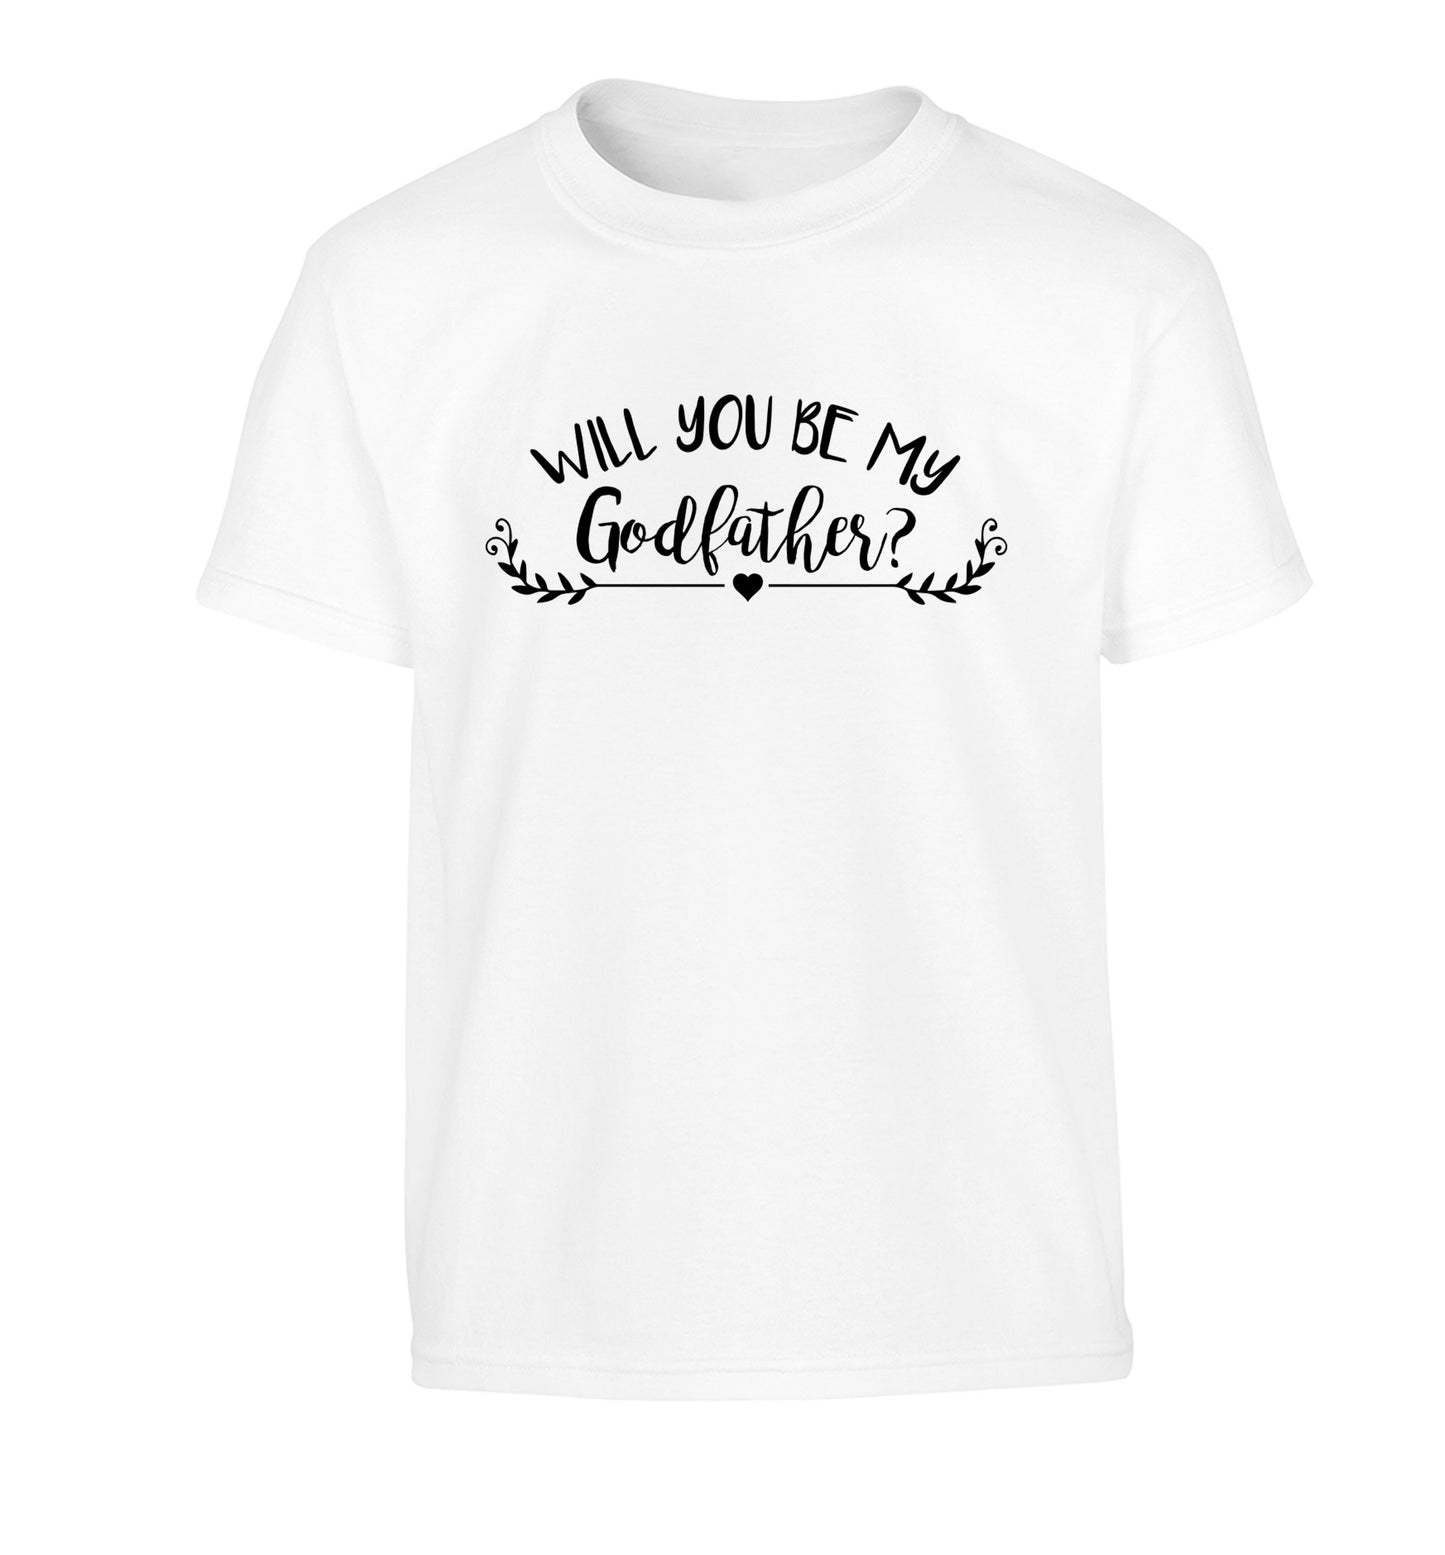 Will you be my godfather? Children's white Tshirt 12-14 Years